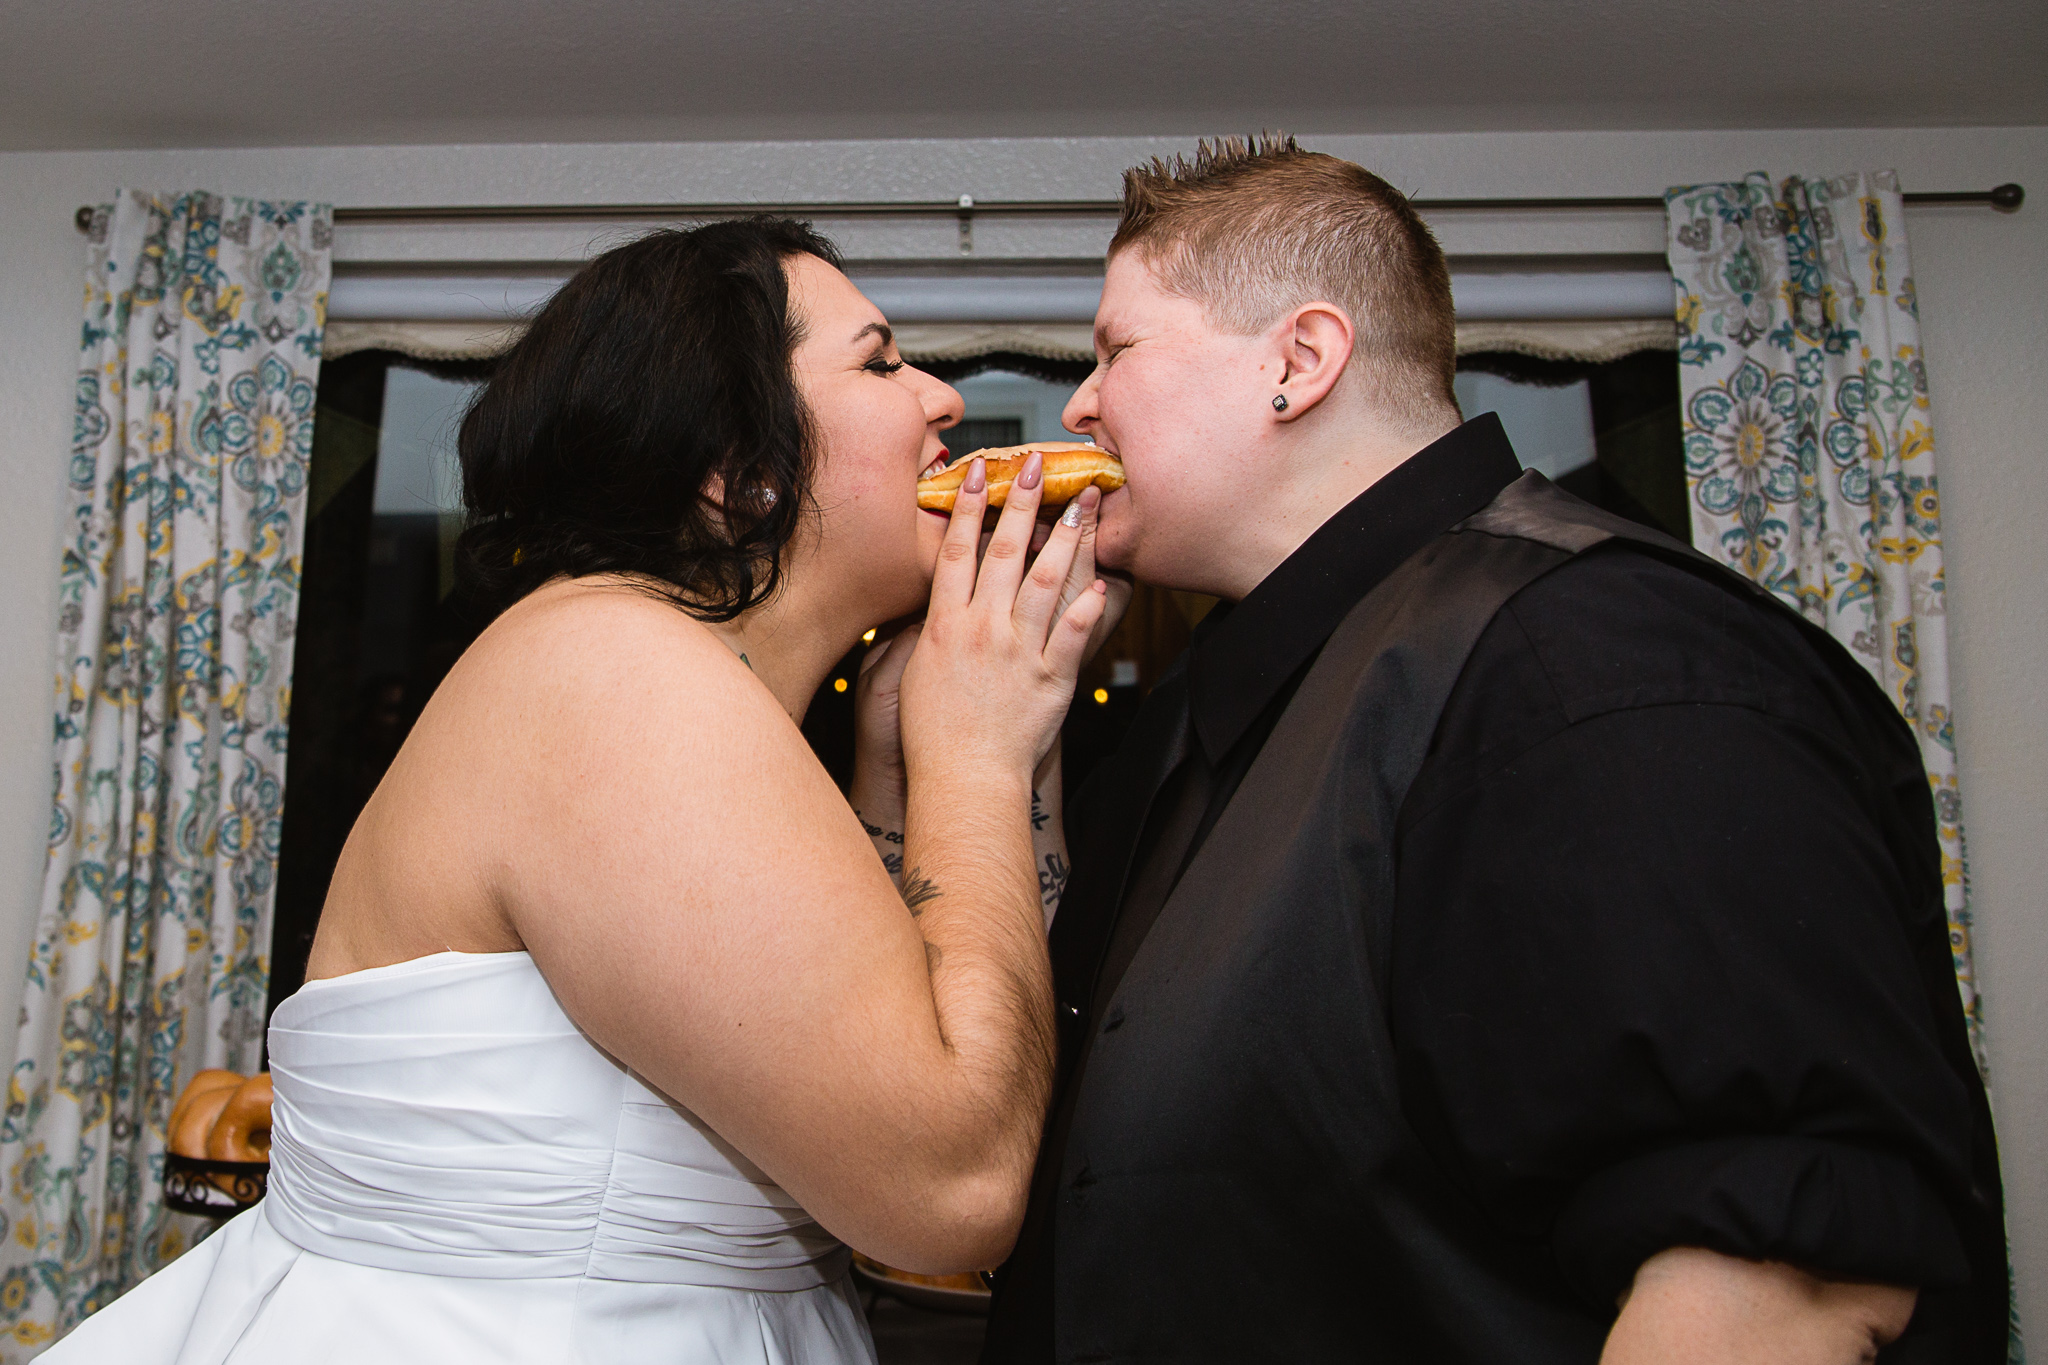 Same sex couple share a long john donut instead of cake on their wedding night.